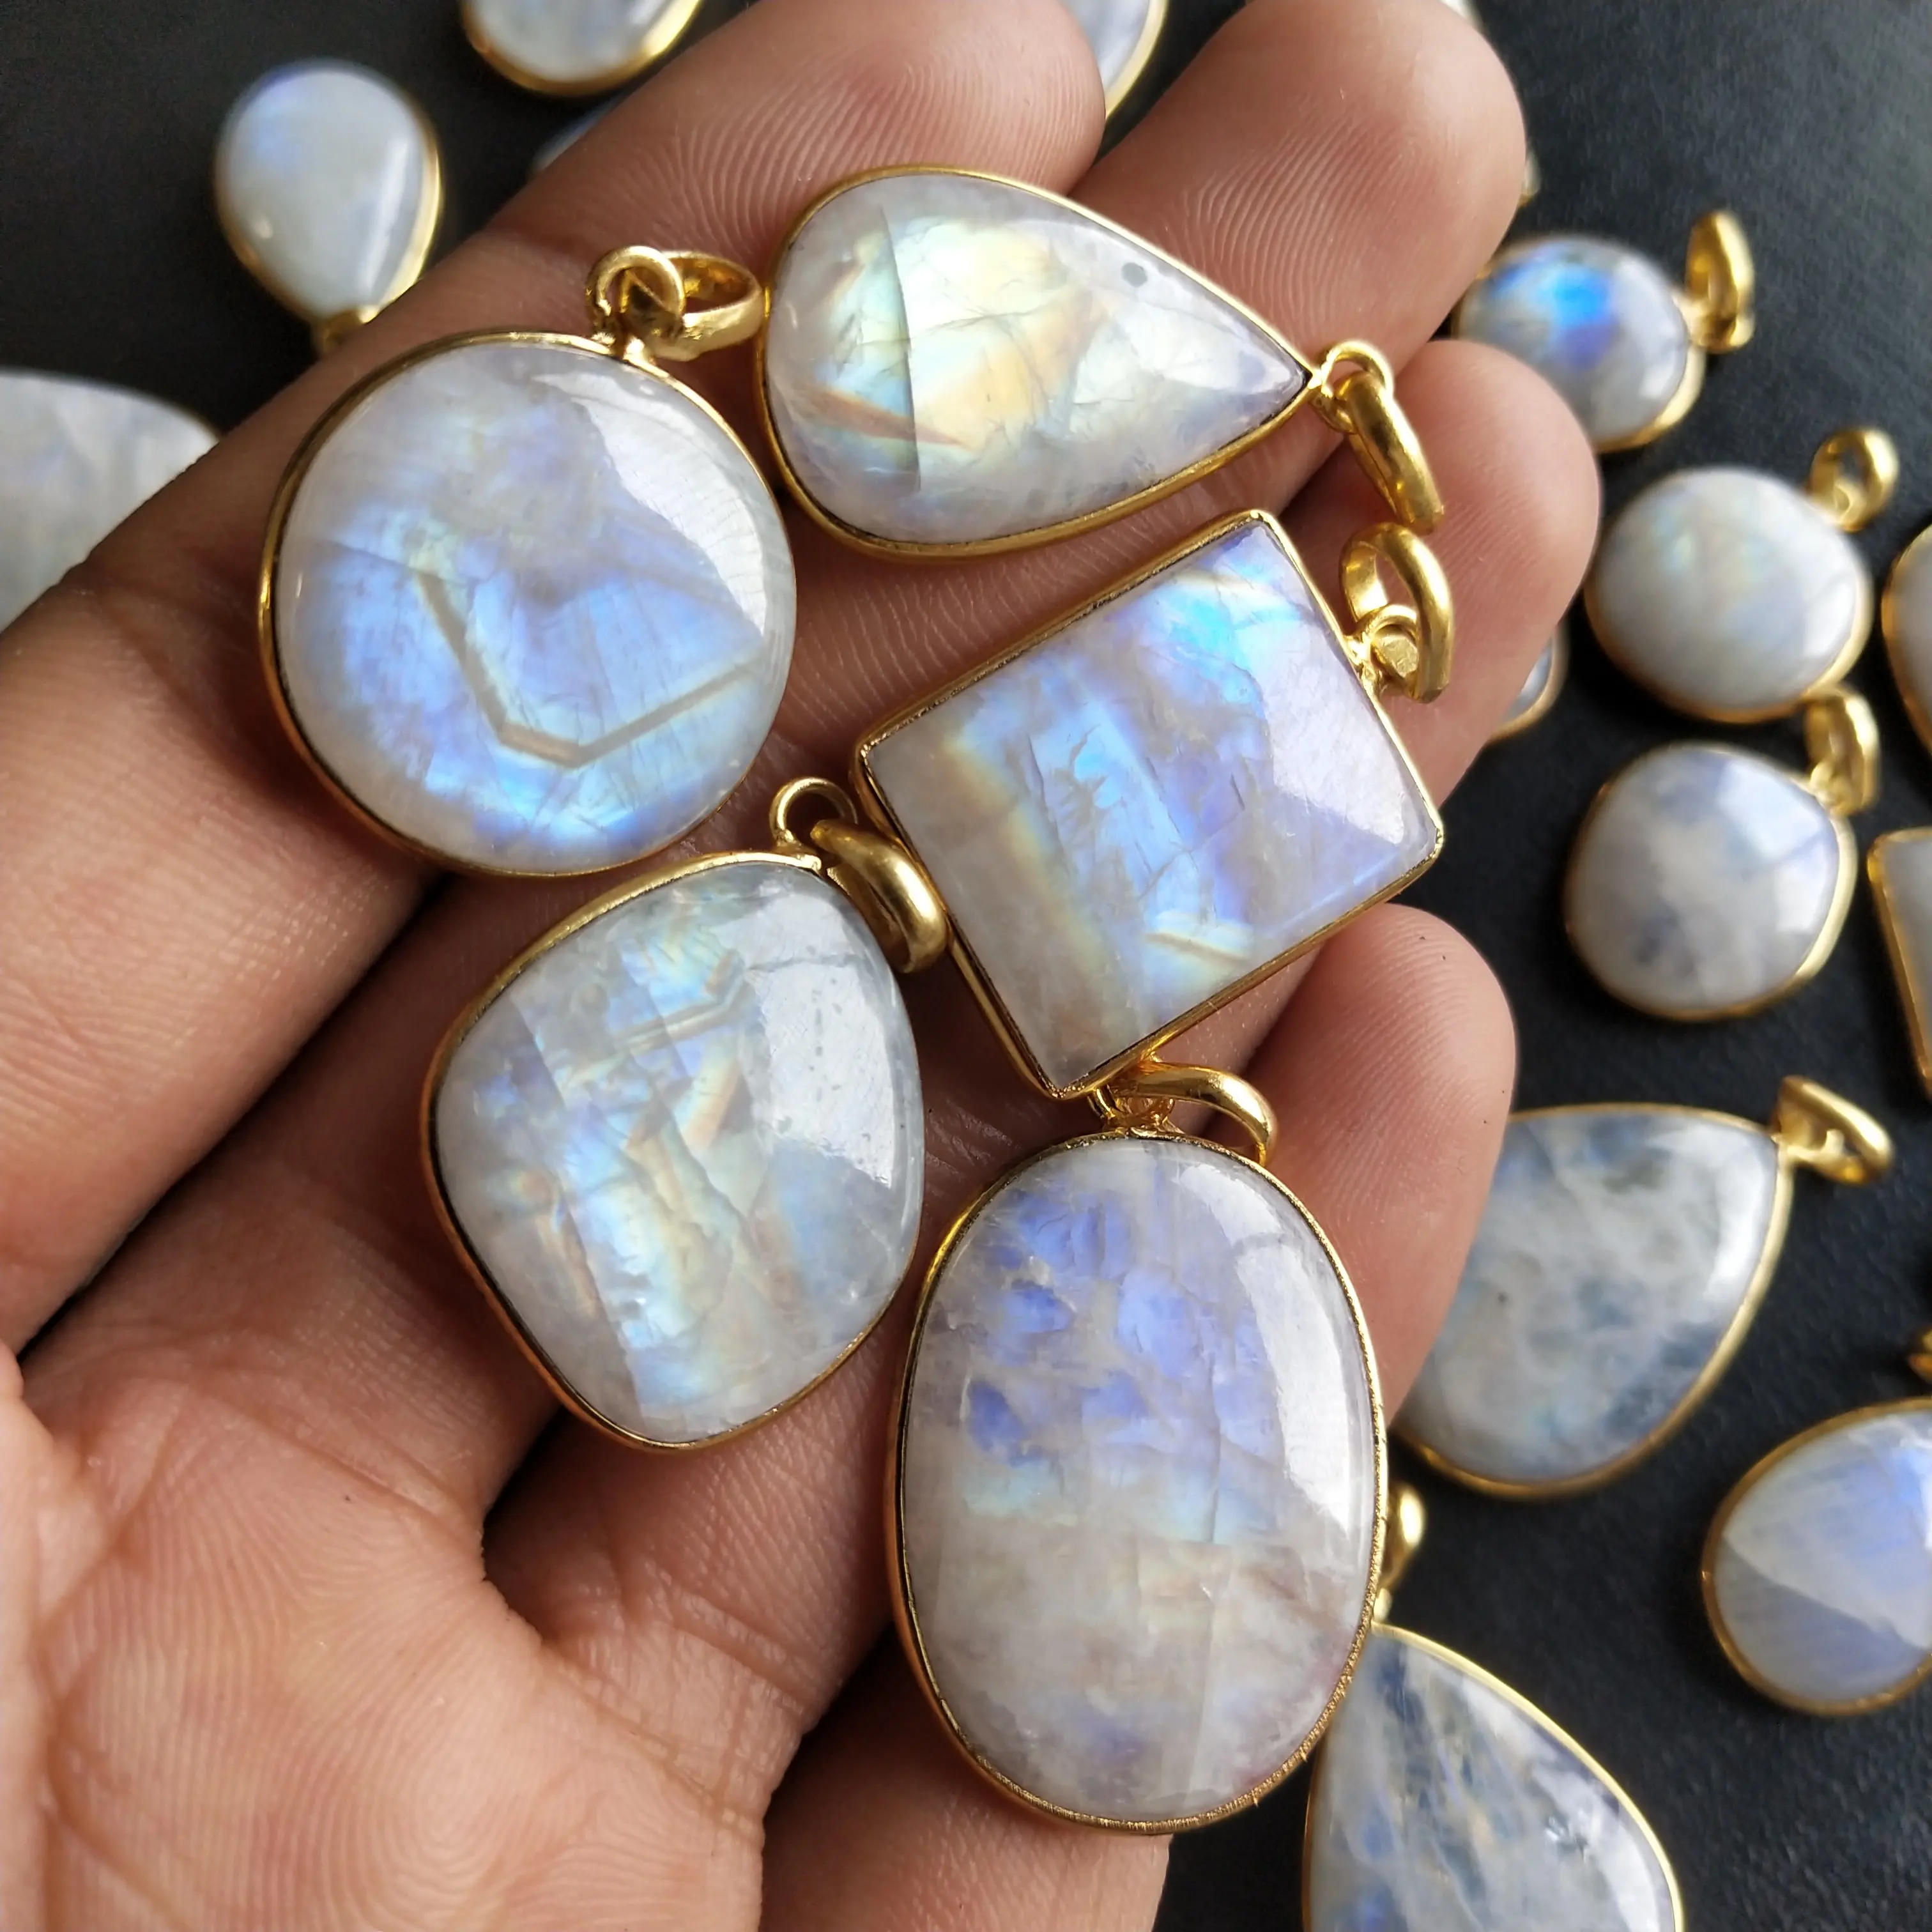 Ensemble de pierres de lune arc-en-ciel en forme de larimar, pendentif en cristal de la république, pierres de zircon cubique